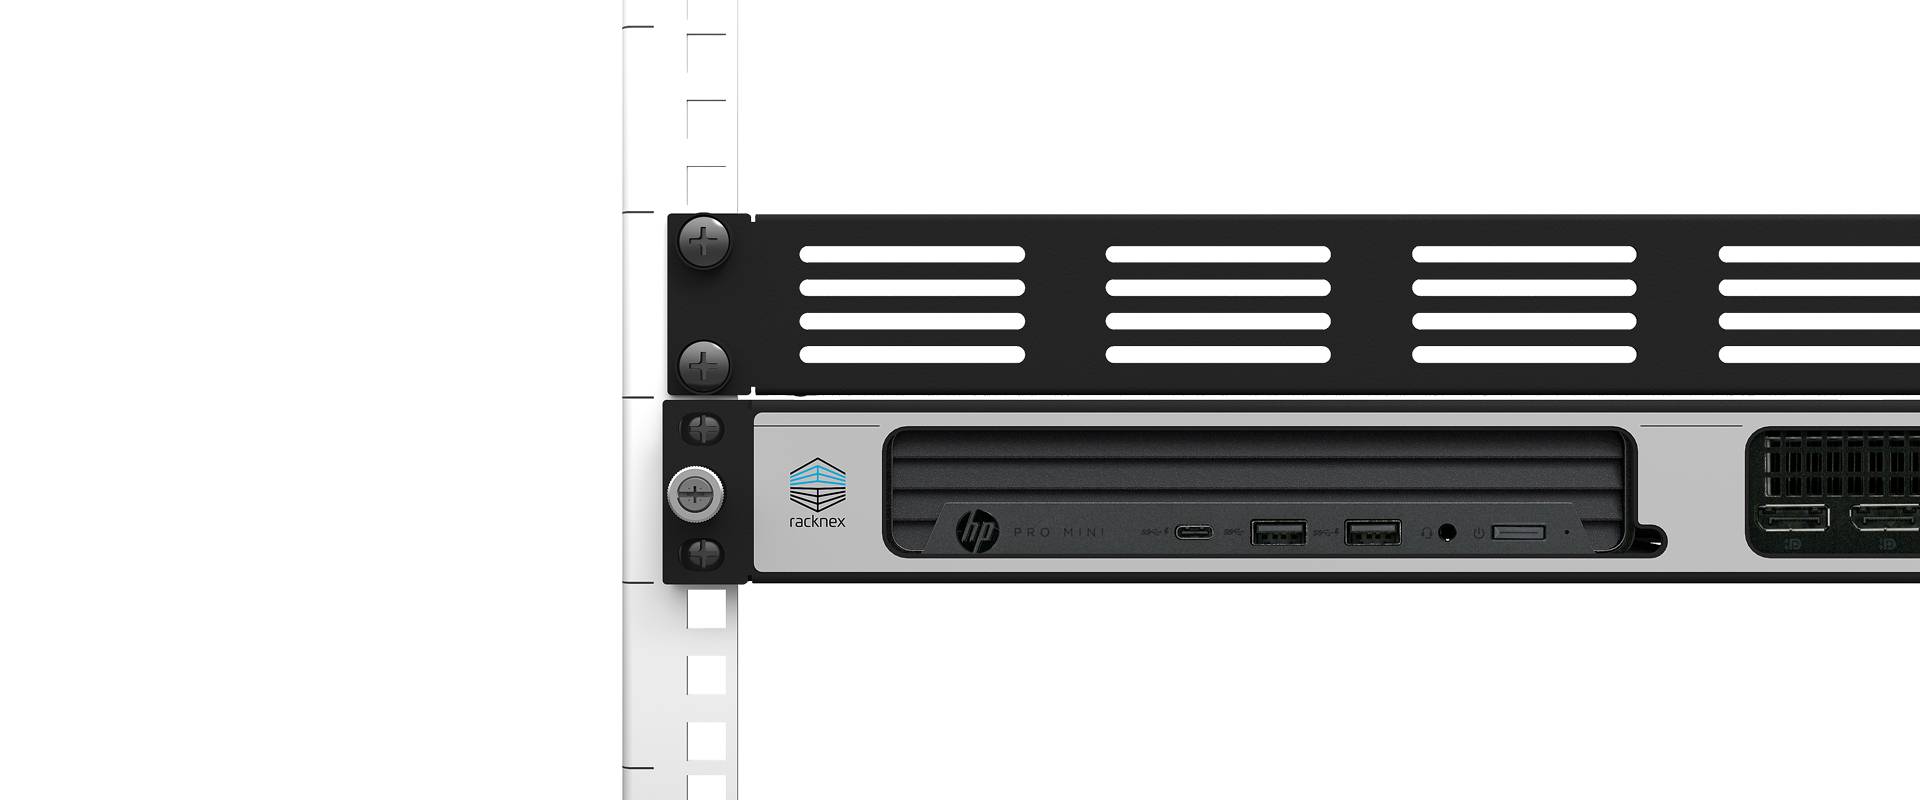 HP Mini PC rackmount kit